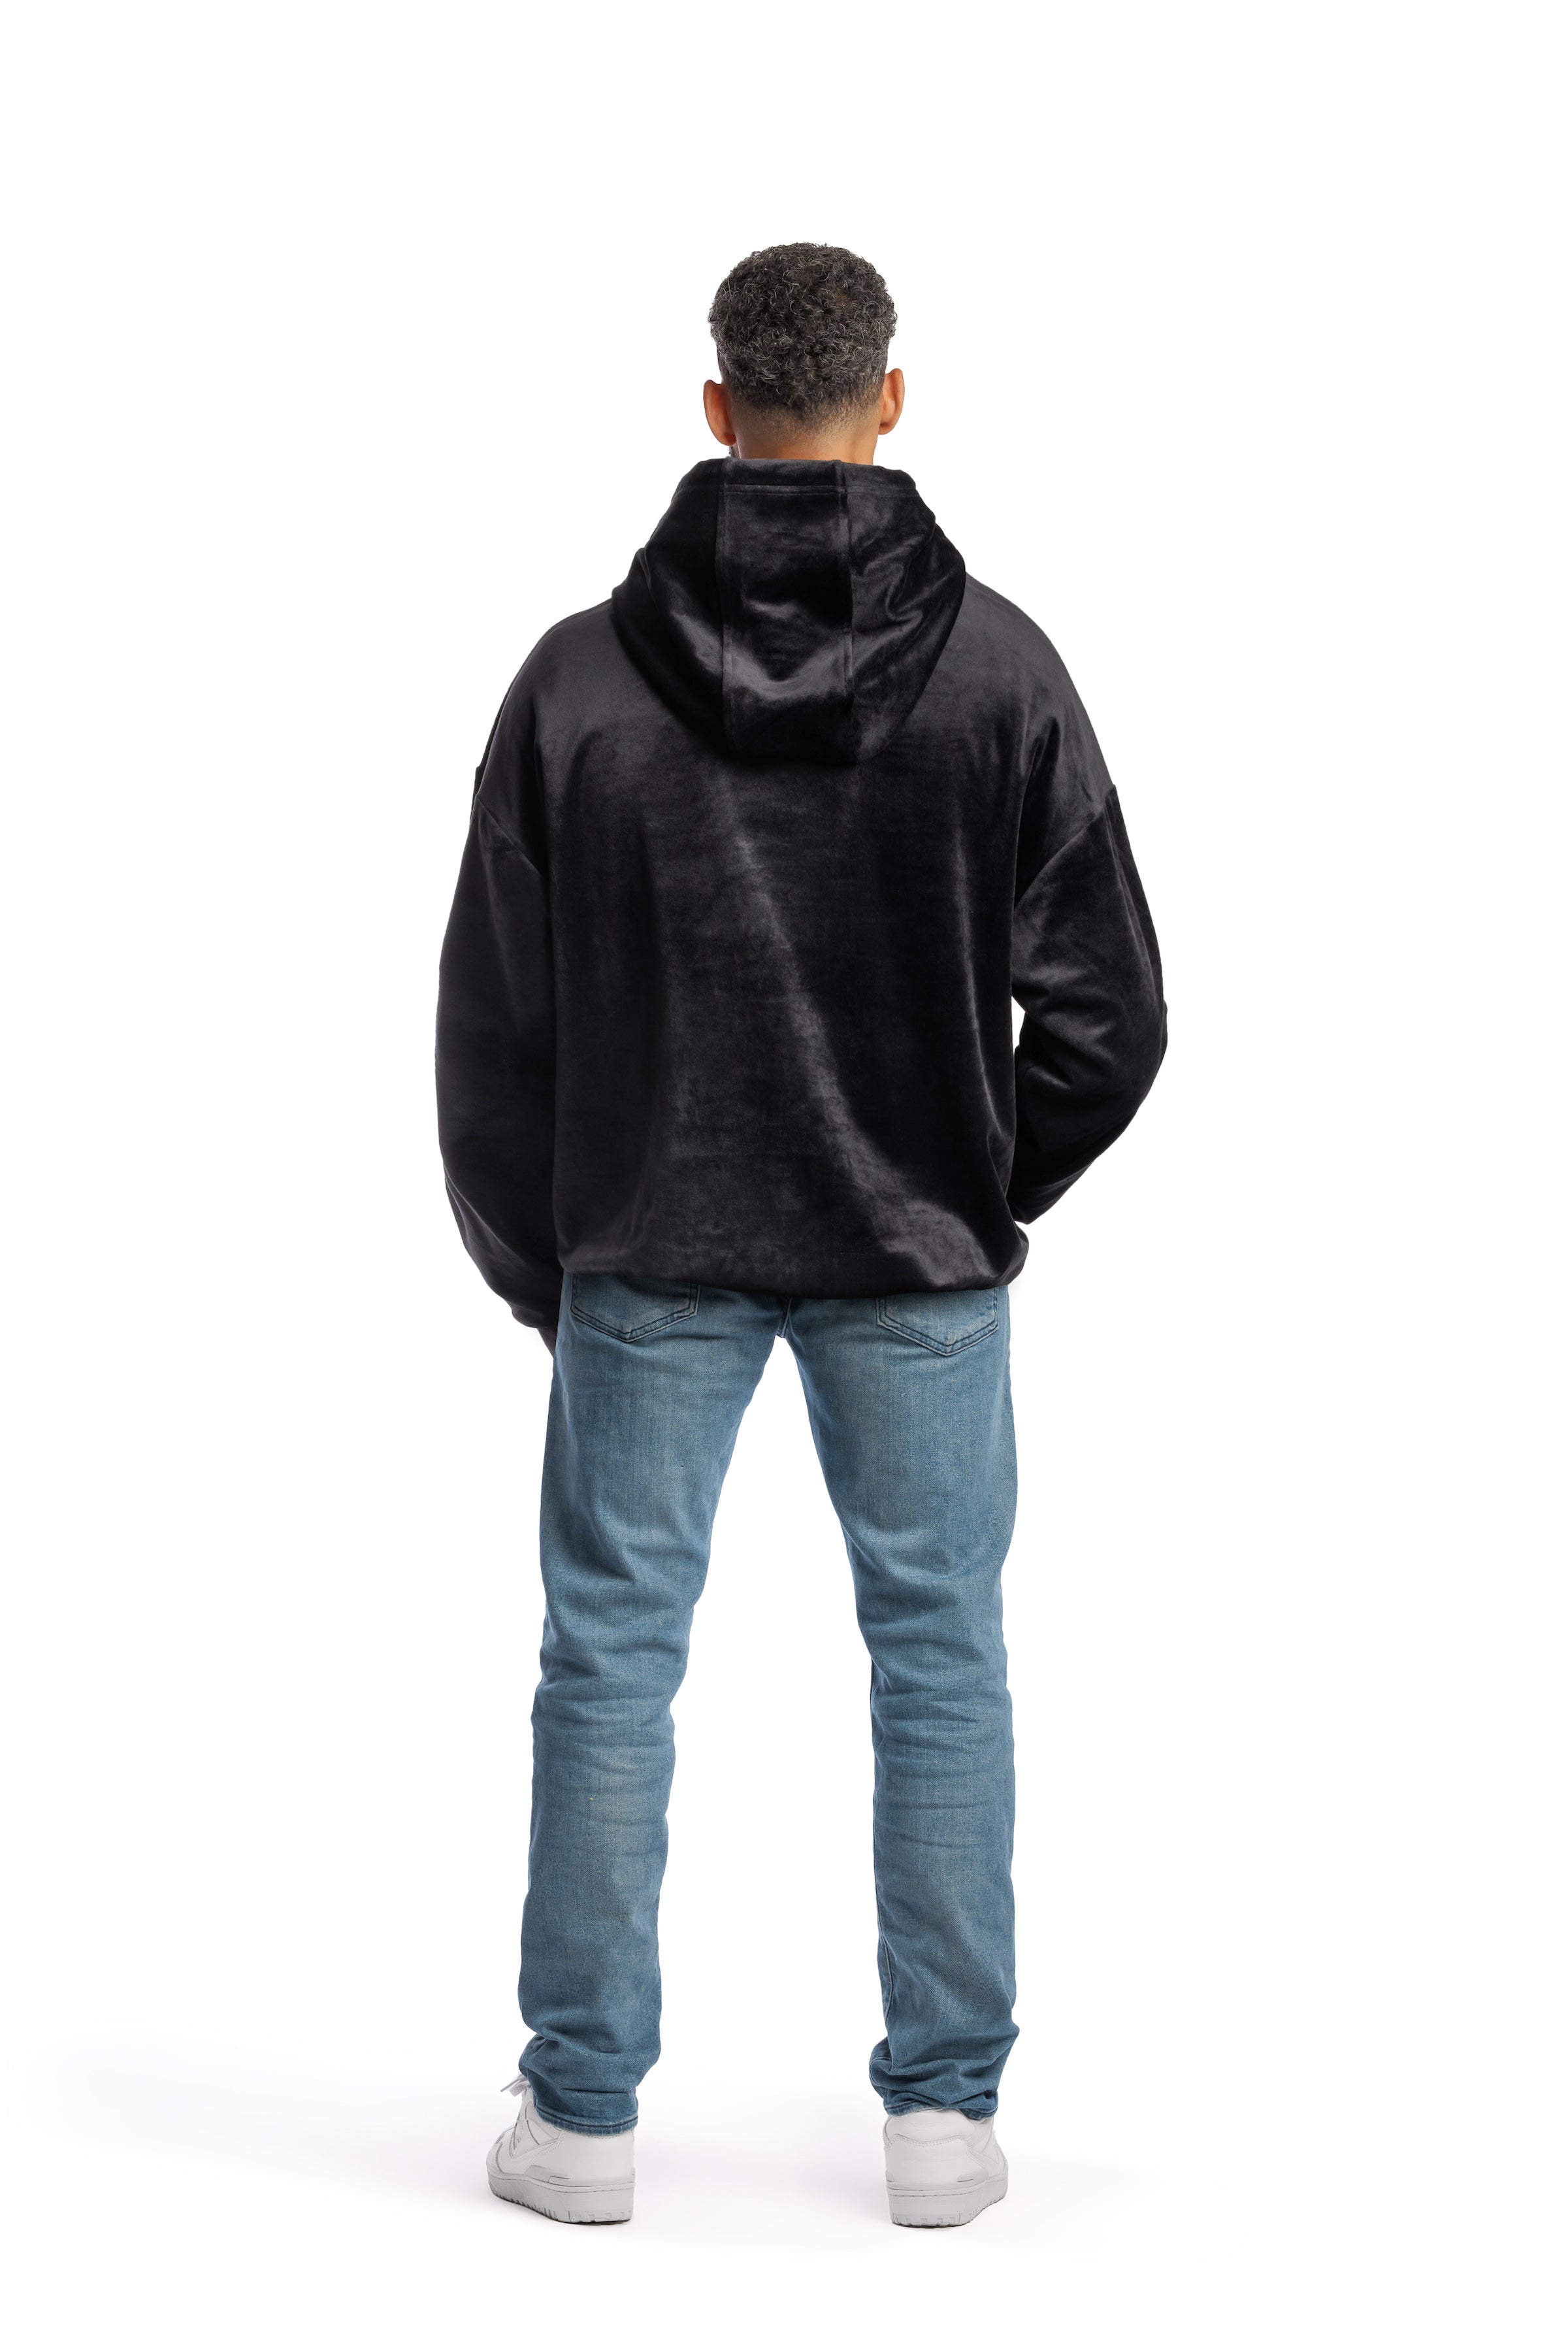 Men’s double-face velour hoodie in black